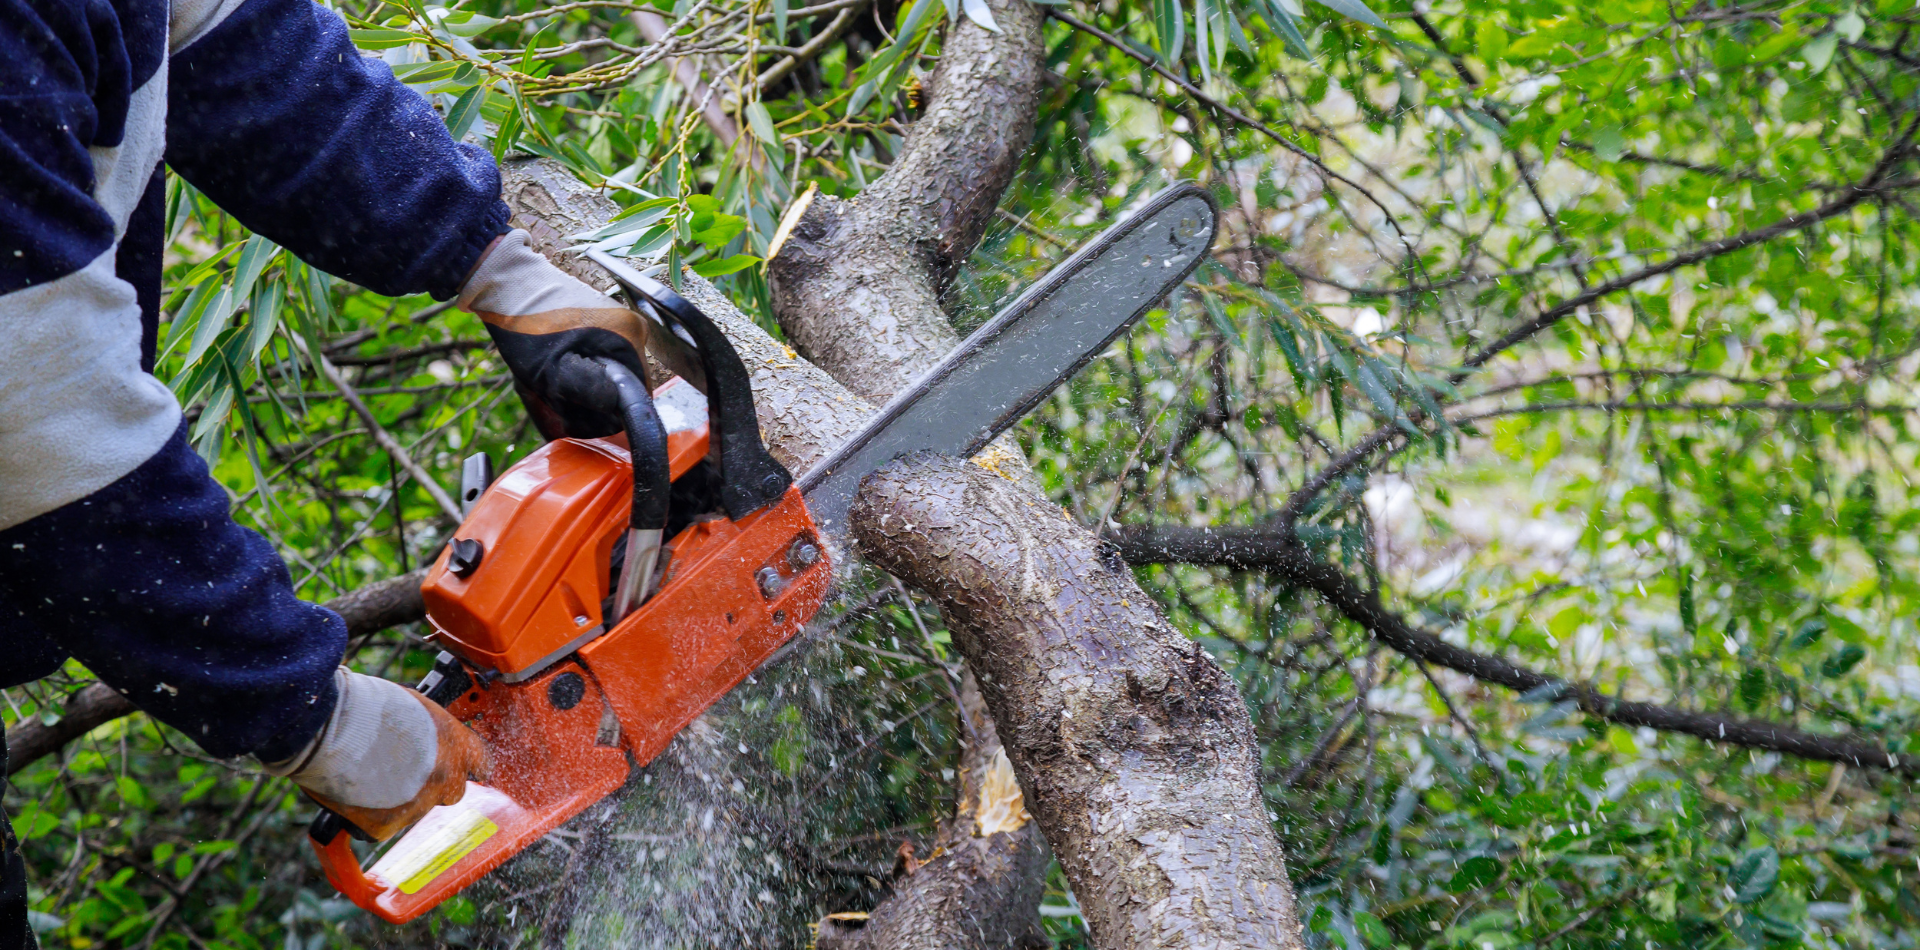 An arborist using a chainsaw